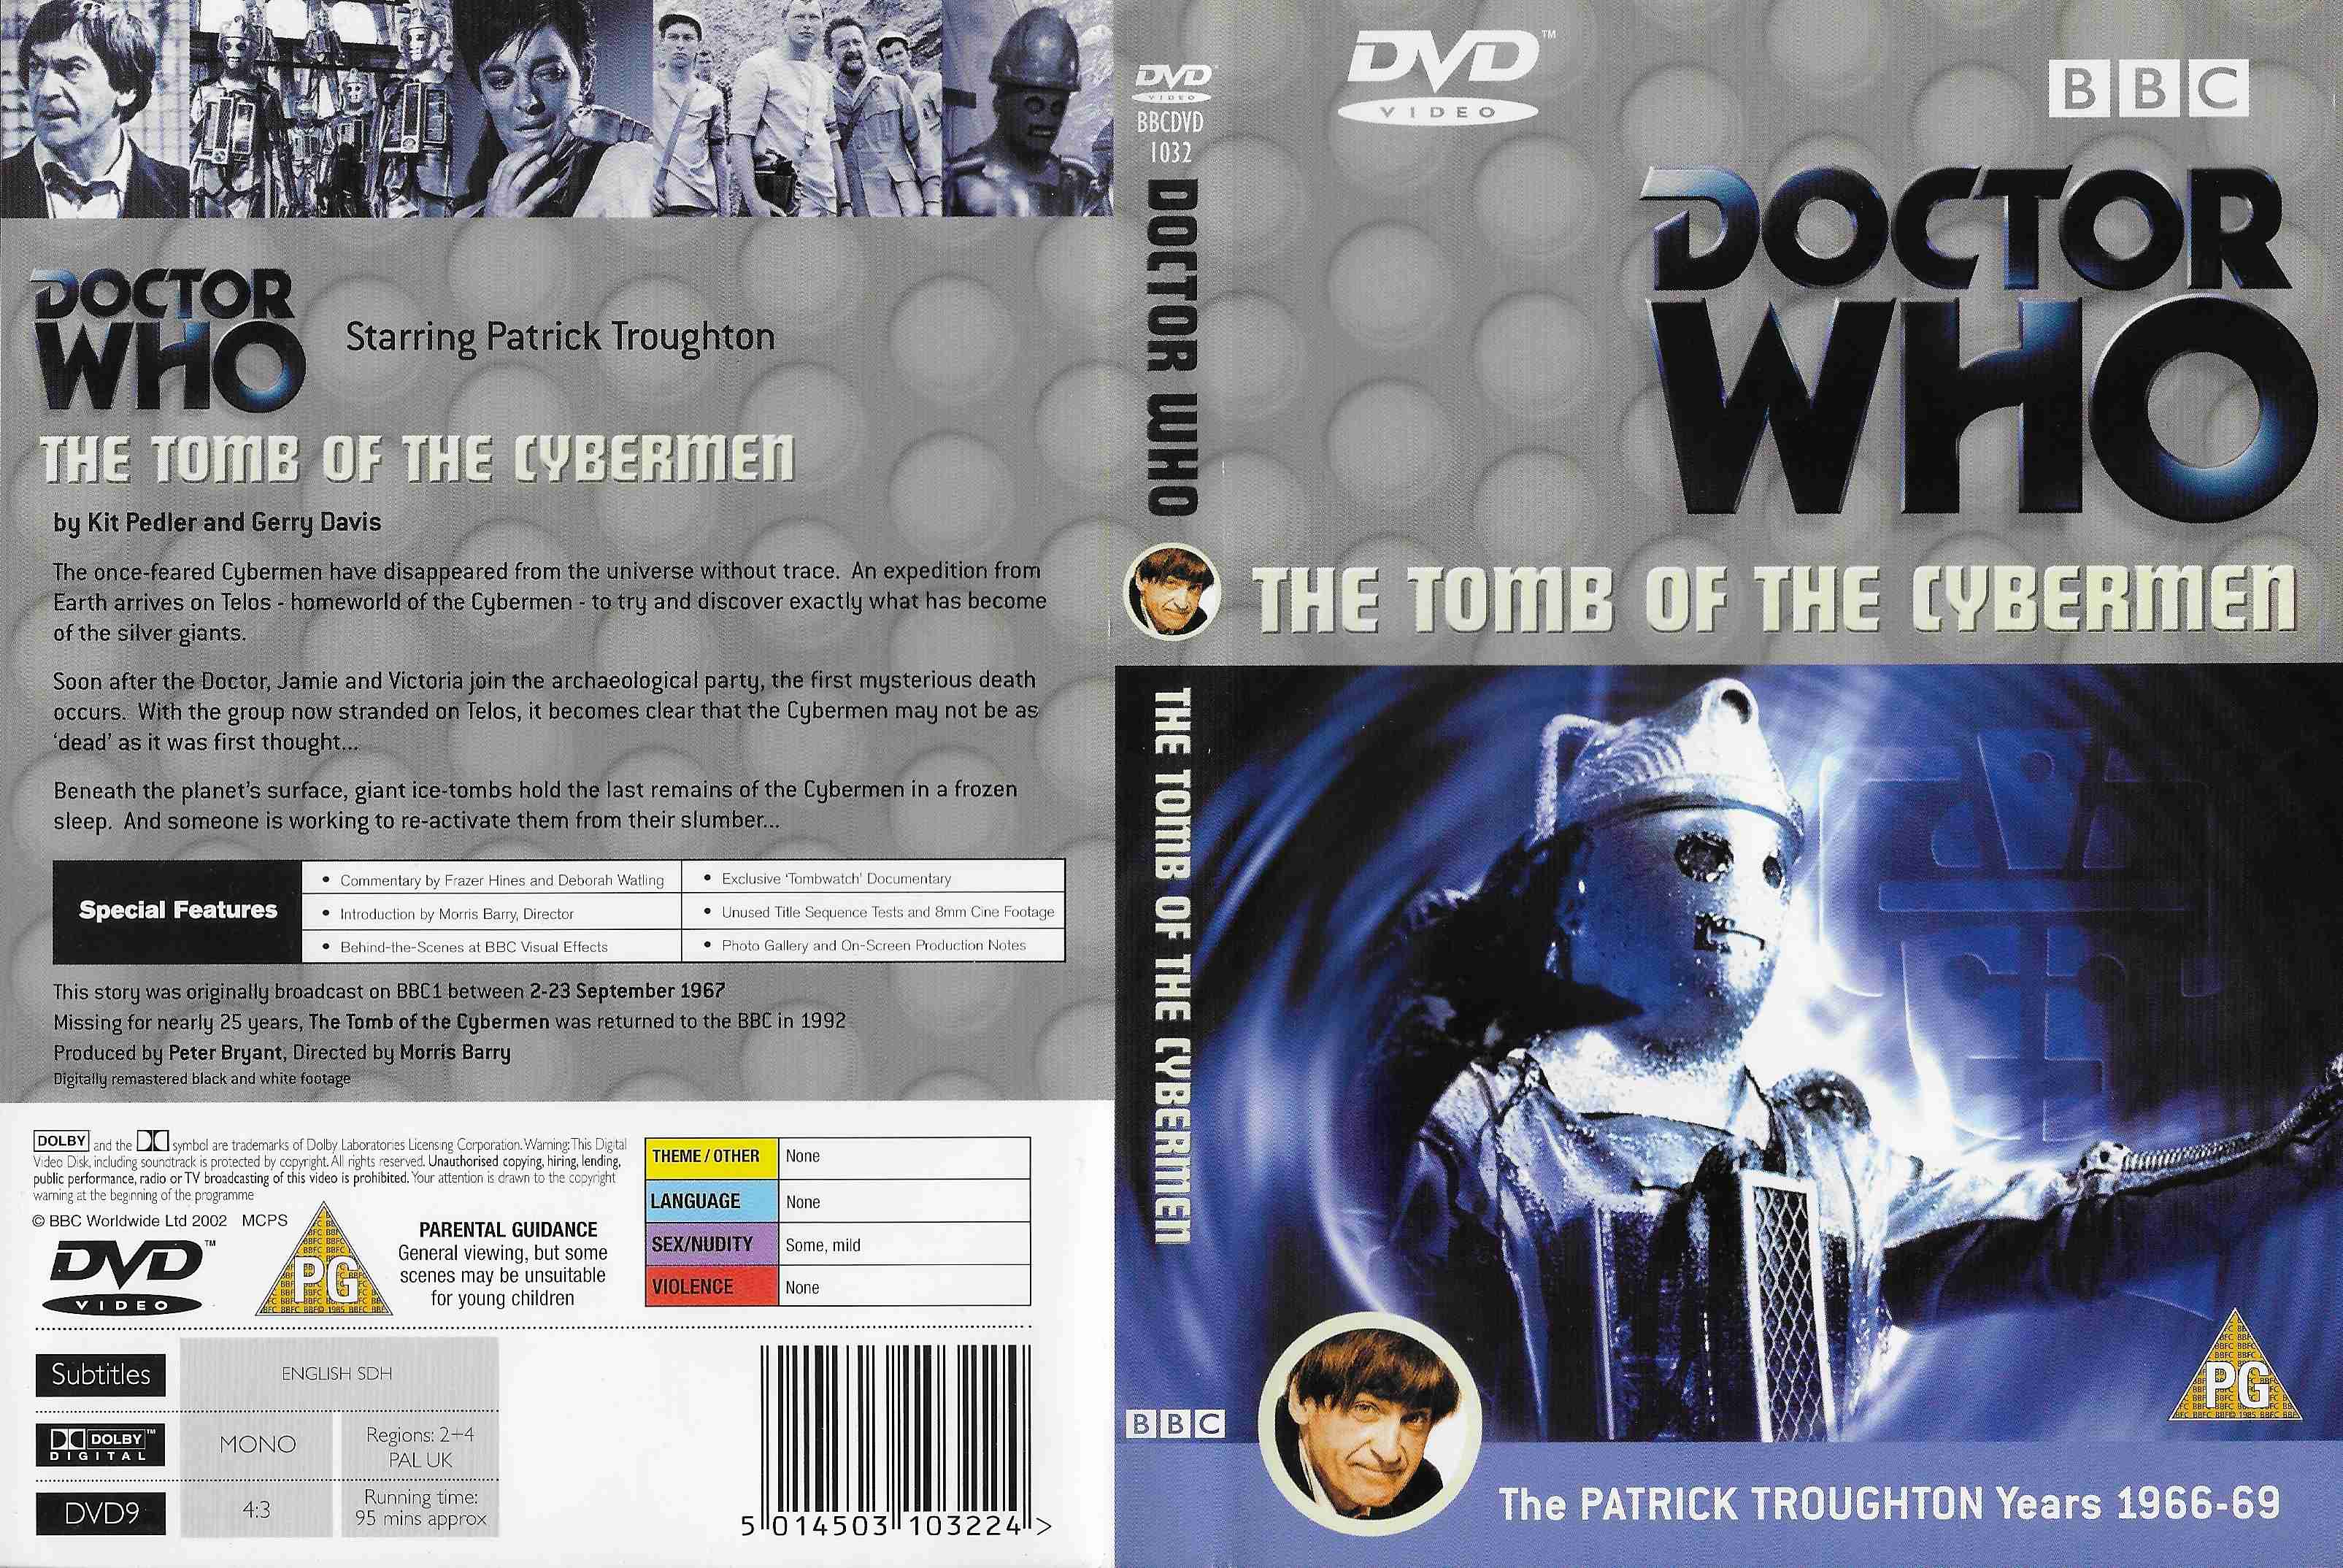 Back cover of BBCDVD 1032